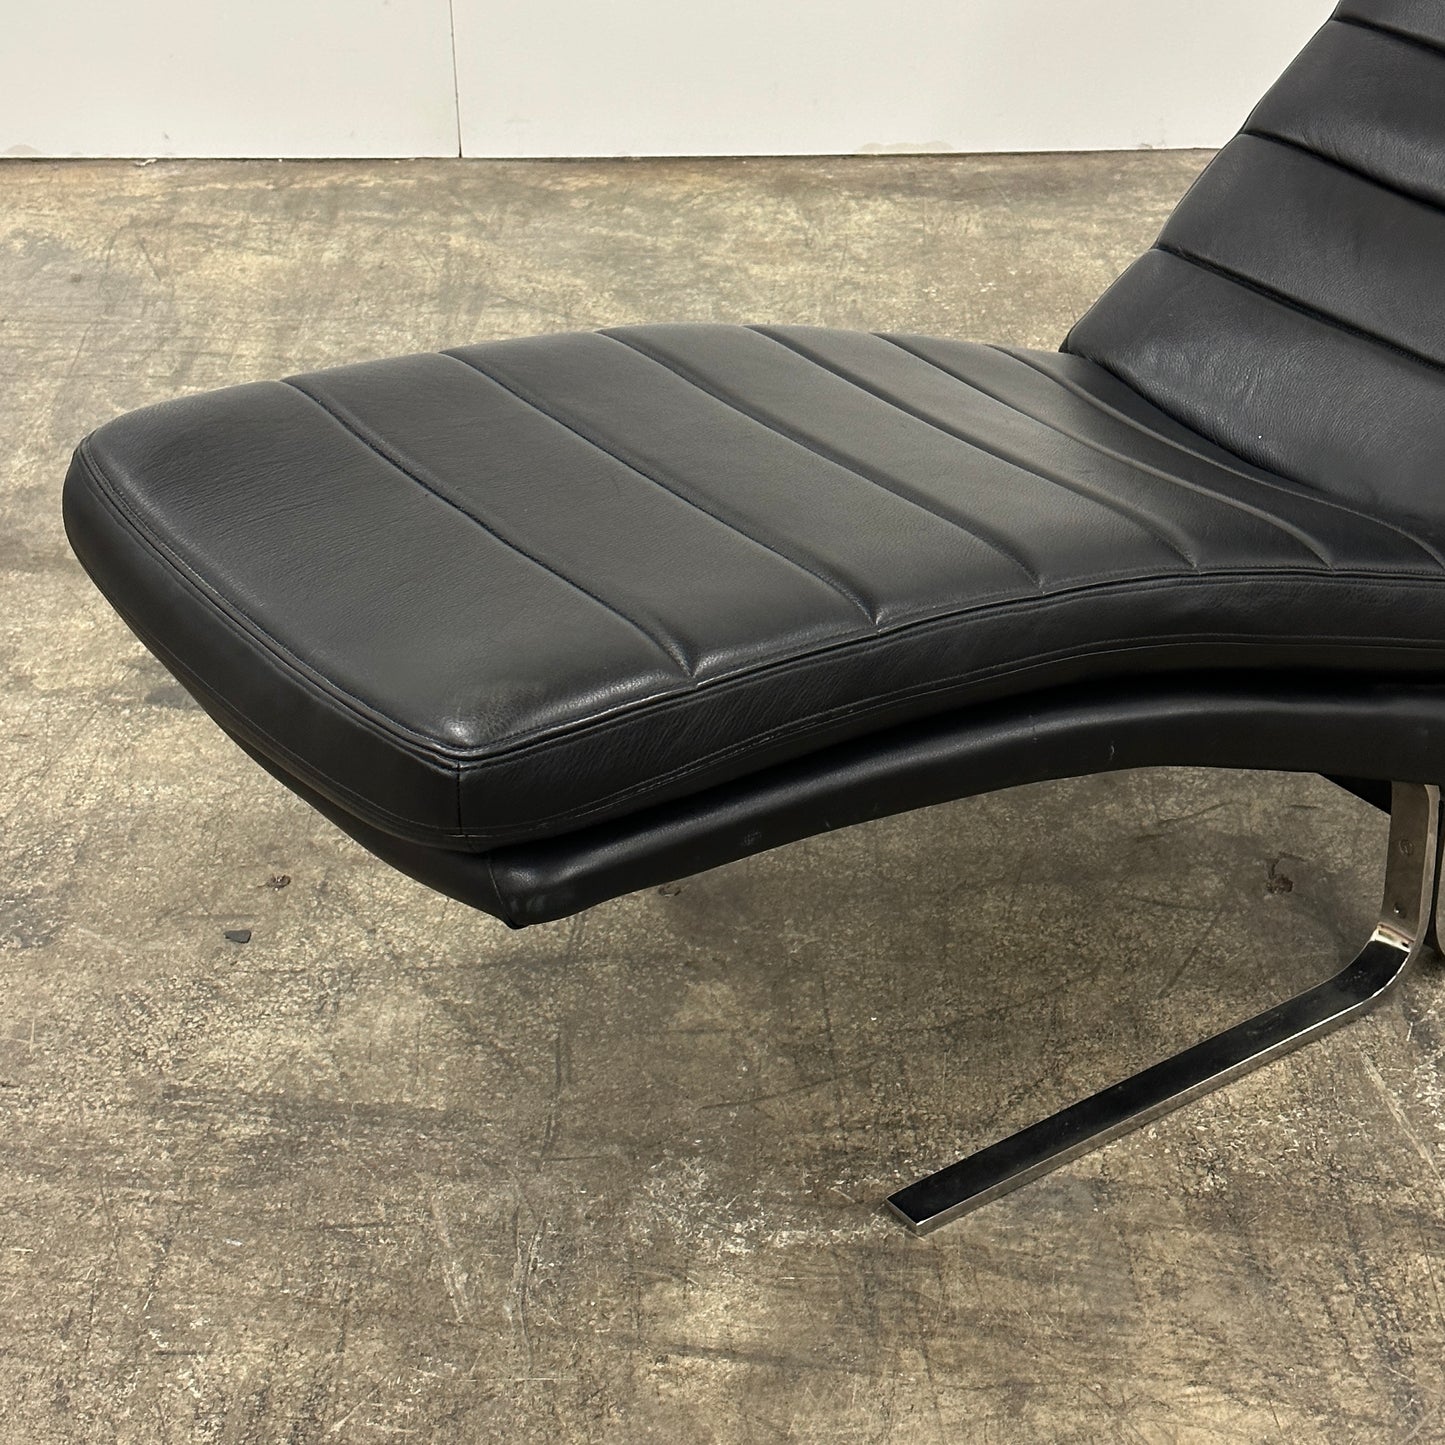 Postmodern Leather/Chrome Chaise by Brayton International